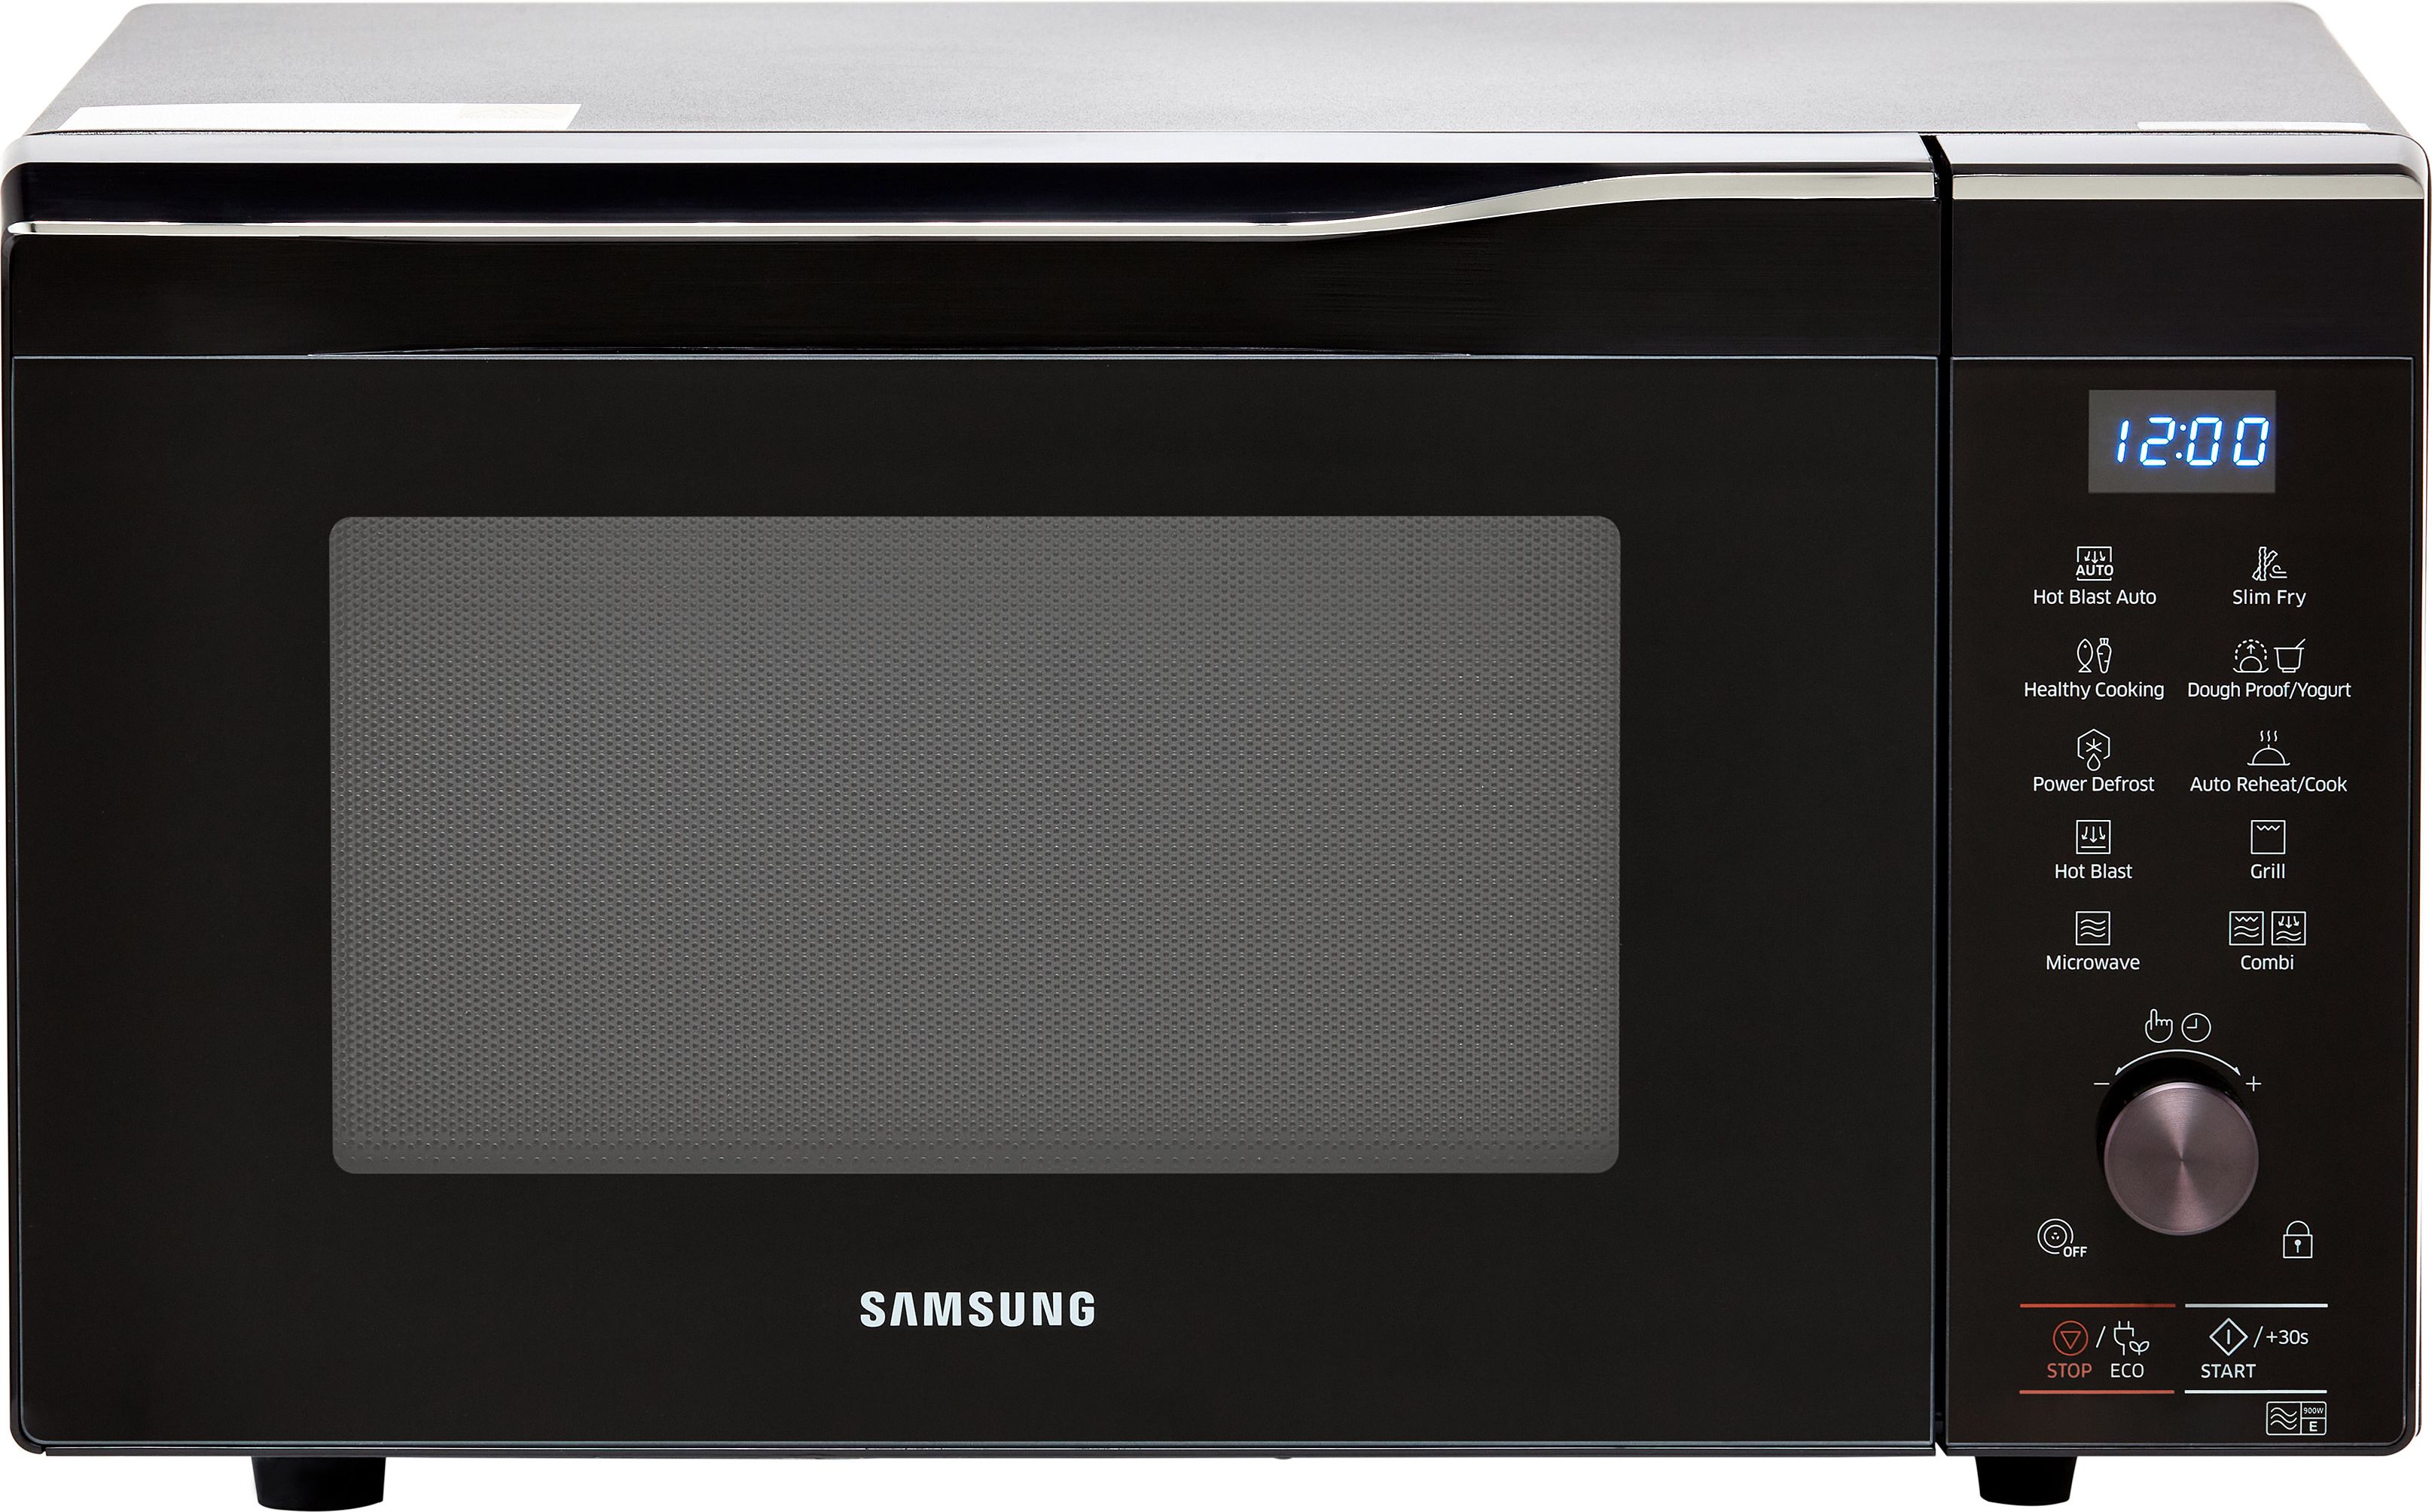 Samsung HotBlast MC32K7055CK 31cm tall, 52cm wide, Freestanding Microwave - Black, Black